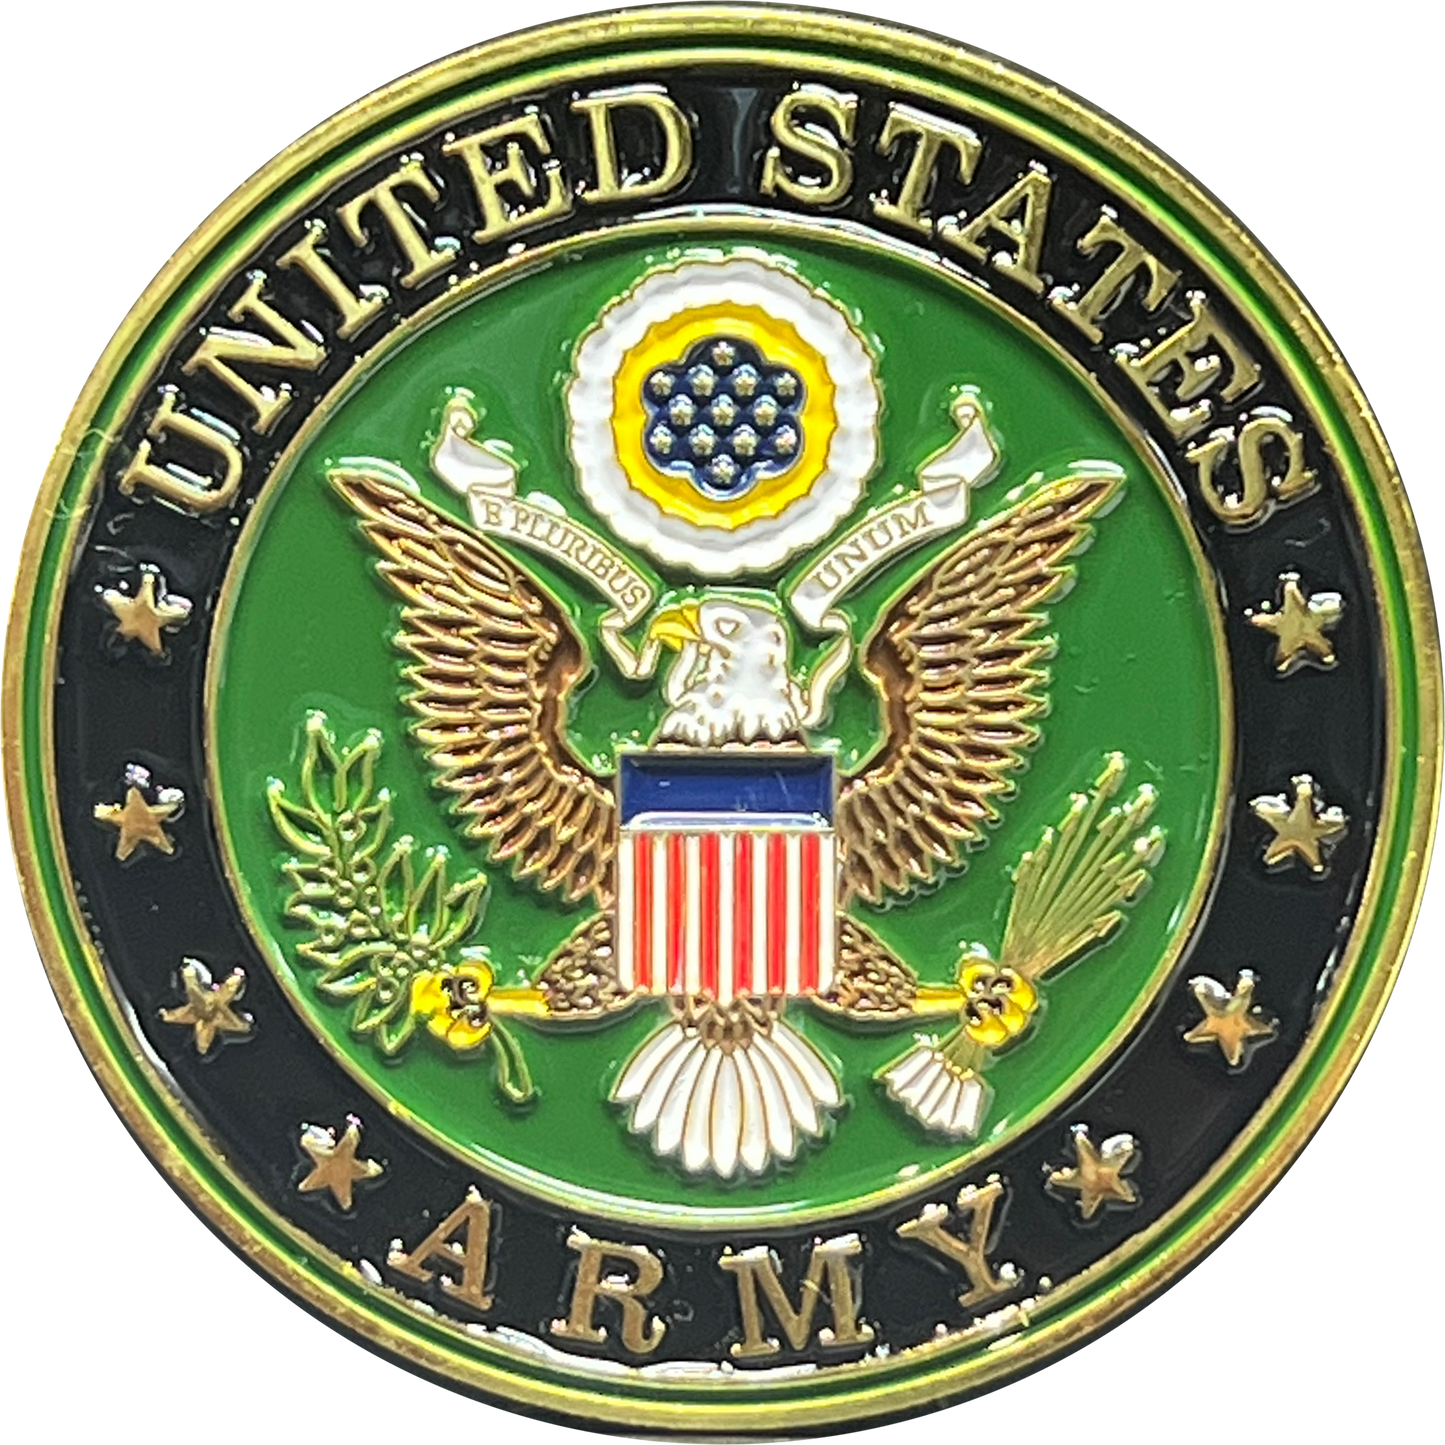 EL11-012 Protectors of the Homeland CBP HSI FAM Secret Service US Army Challenge Coin Military Veteran